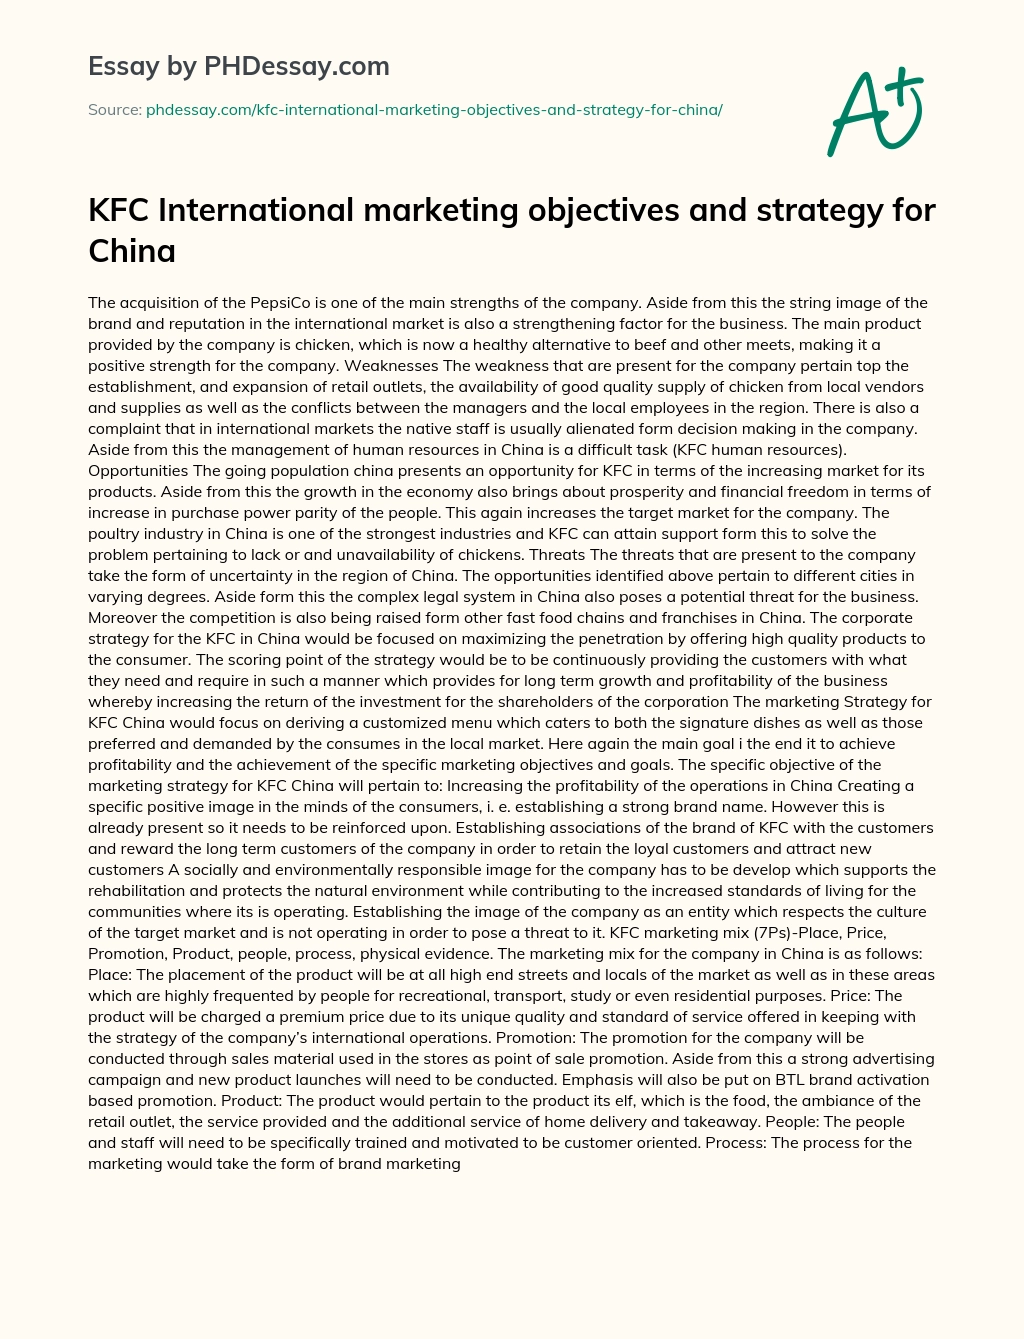 KFC International Marketing Objectives and Strategy for China essay